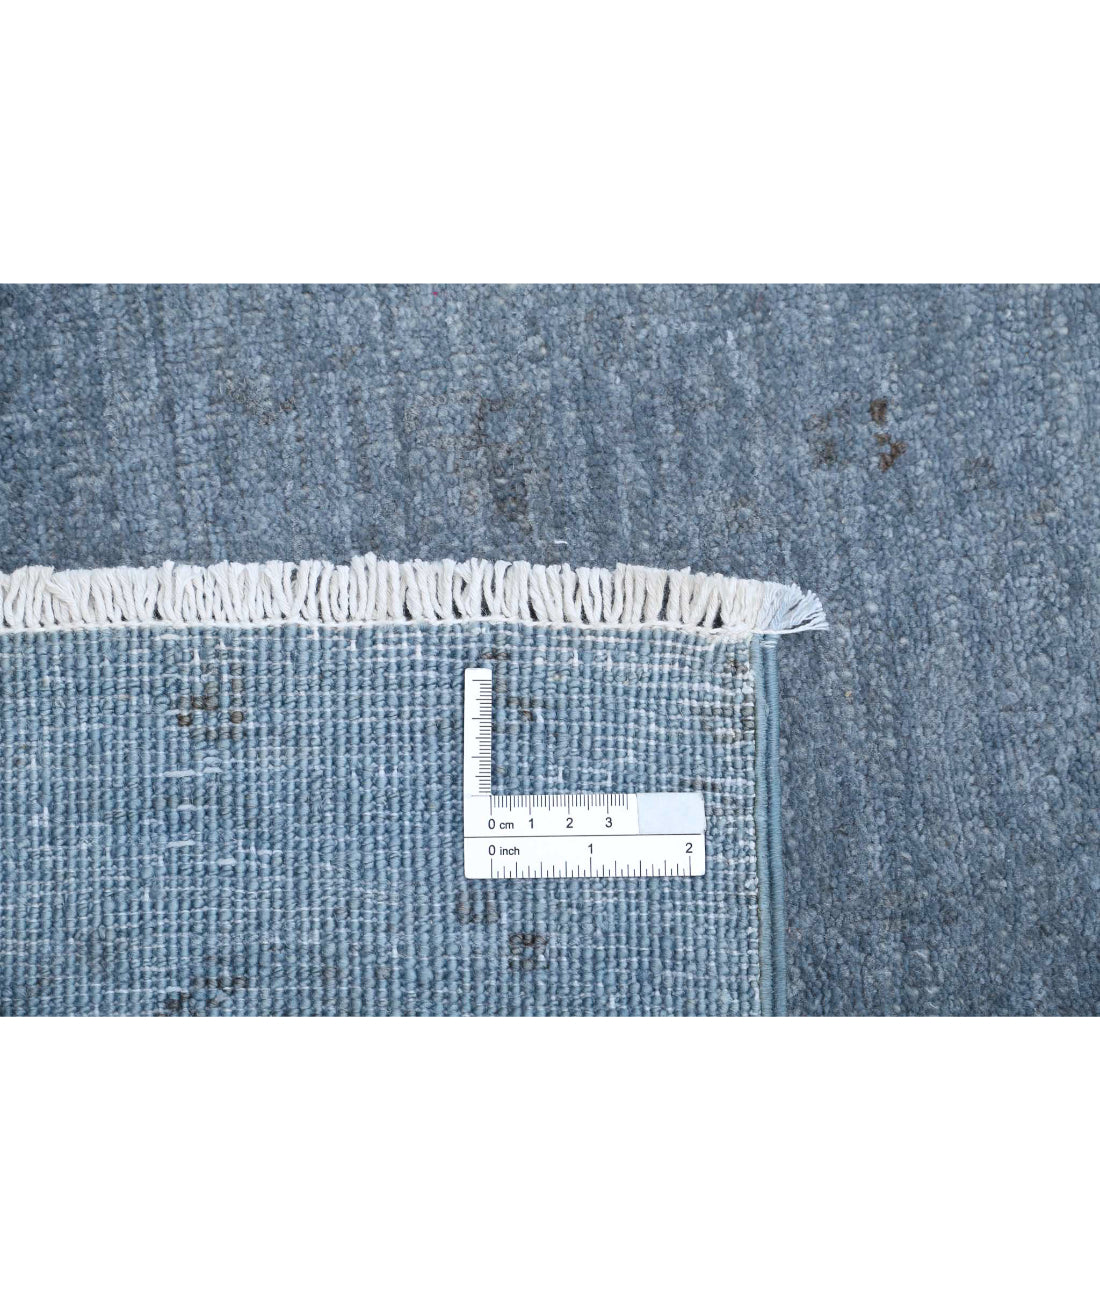 Hand Knotted Overdye Wool Rug - 2'7'' x 10'5'' 2'7'' x 10'5'' (78 X 313) / Grey / Grey